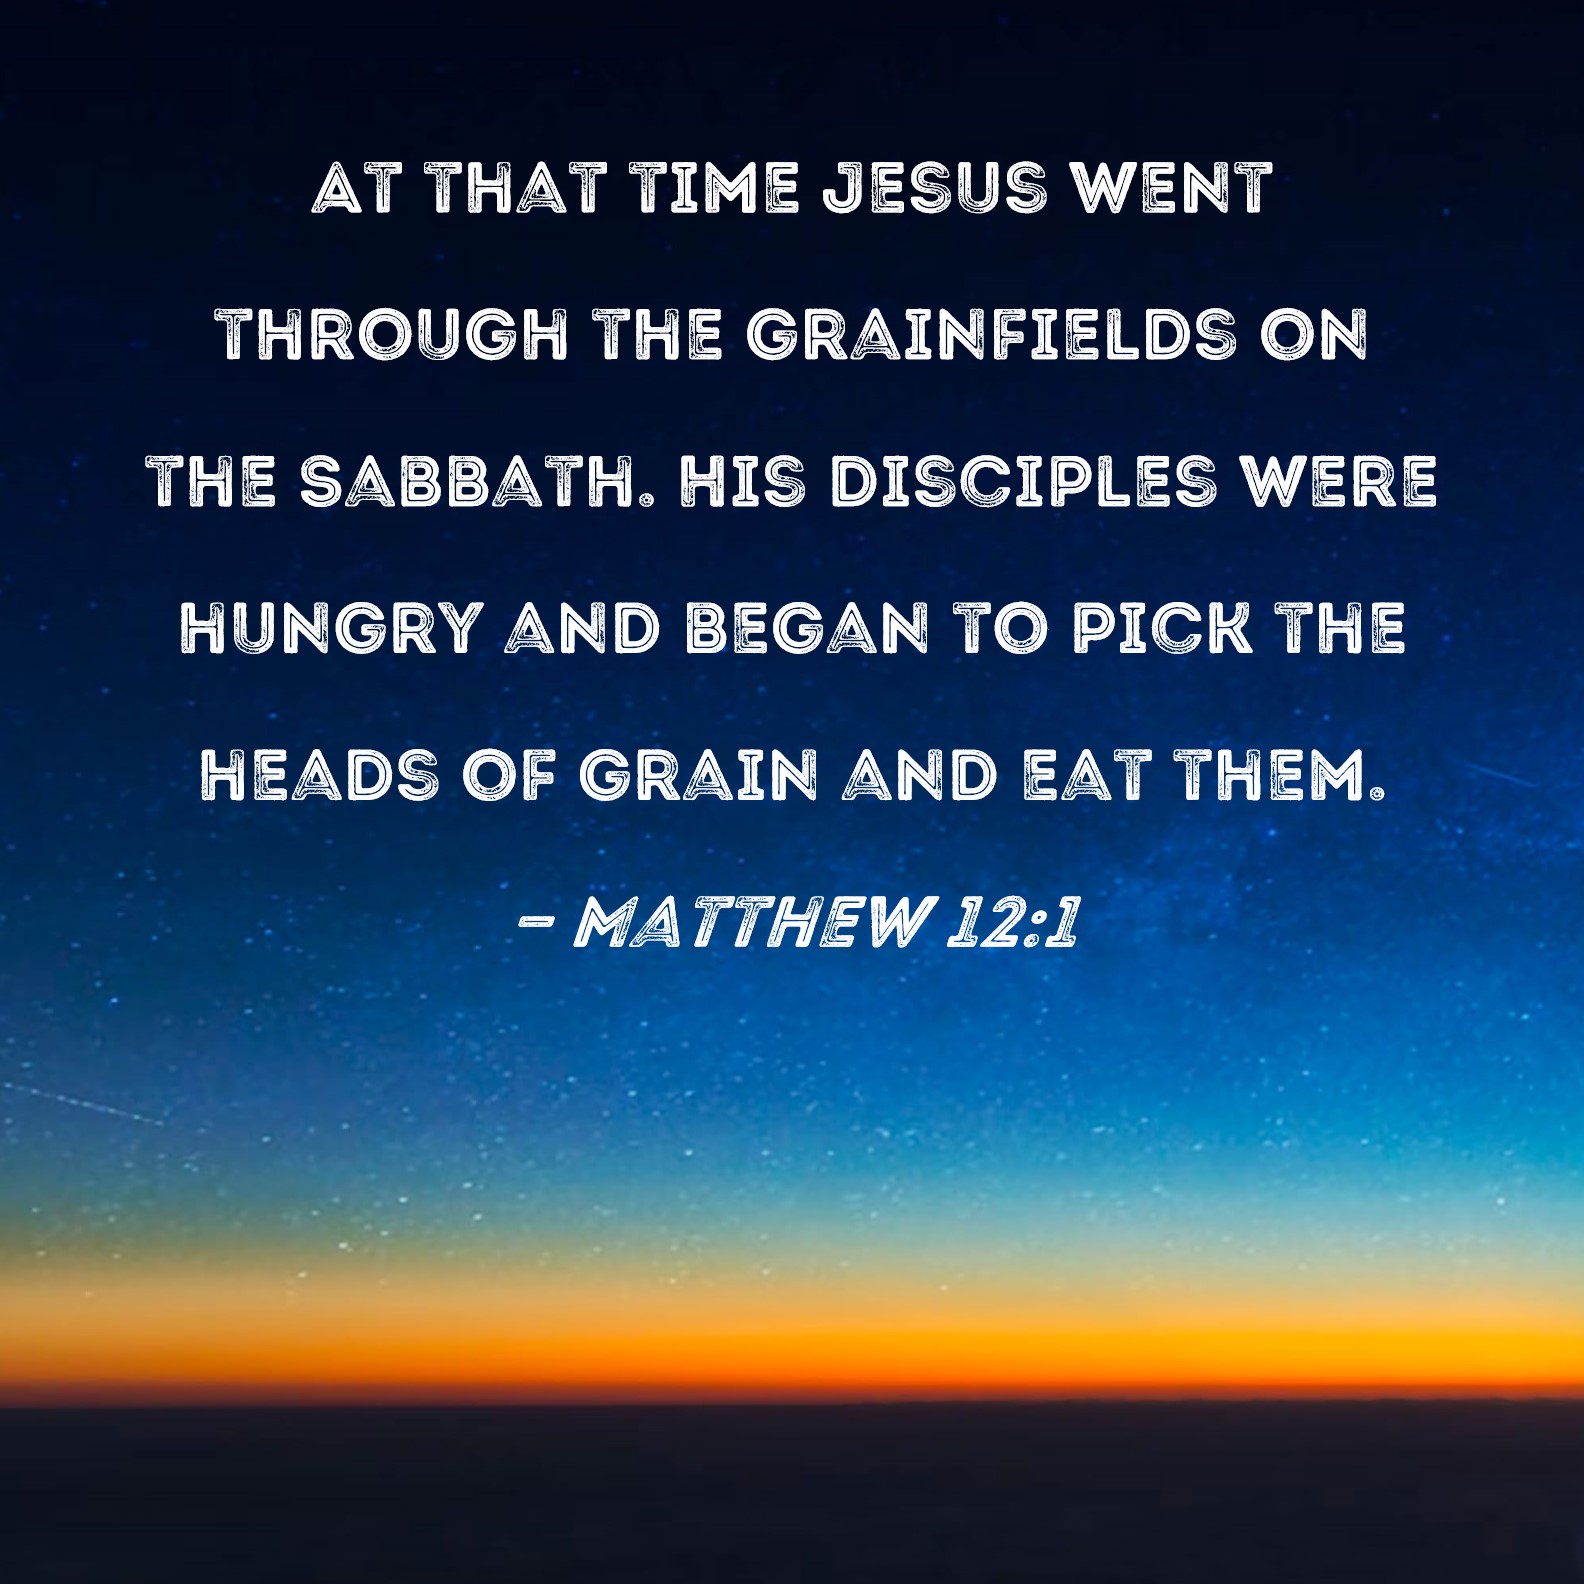 jesus sabbath day